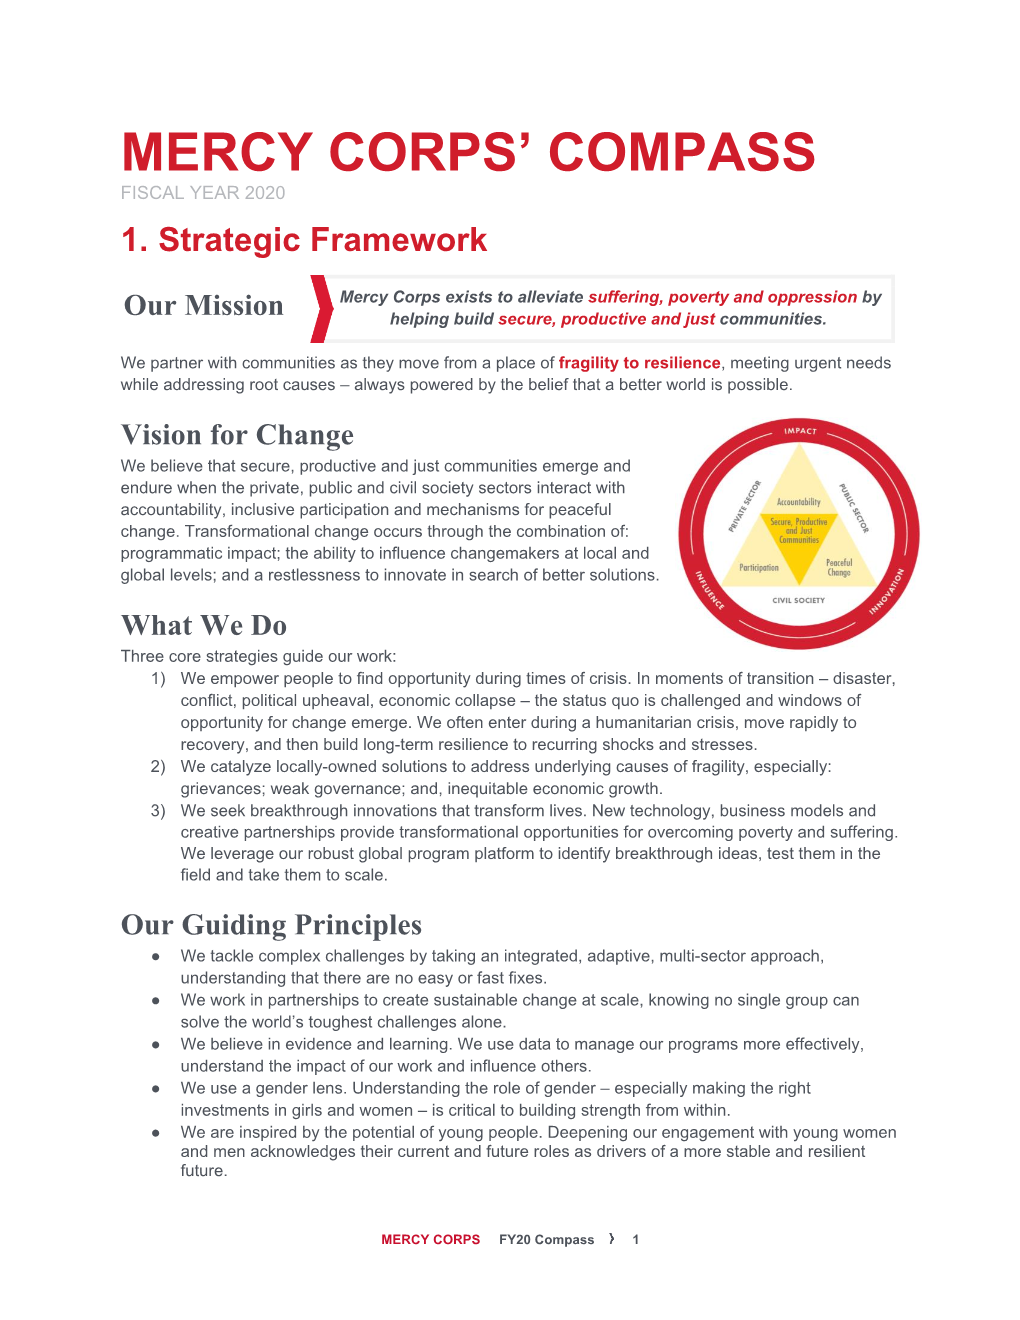 Mercy Corps' Compass